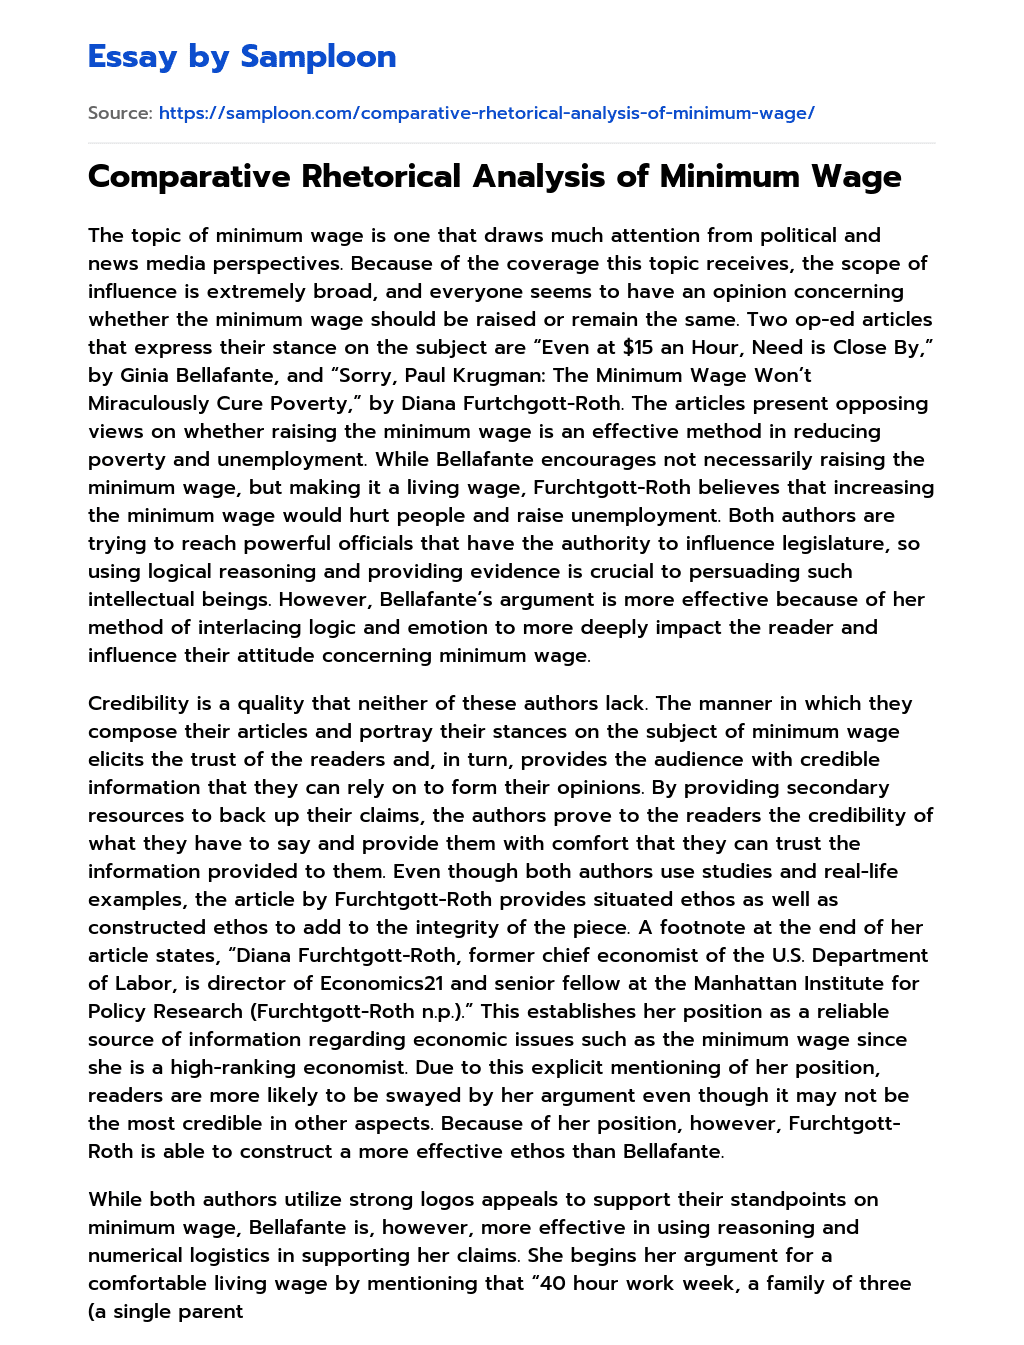 Comparative Rhetorical Analysis of Minimum Wage essay